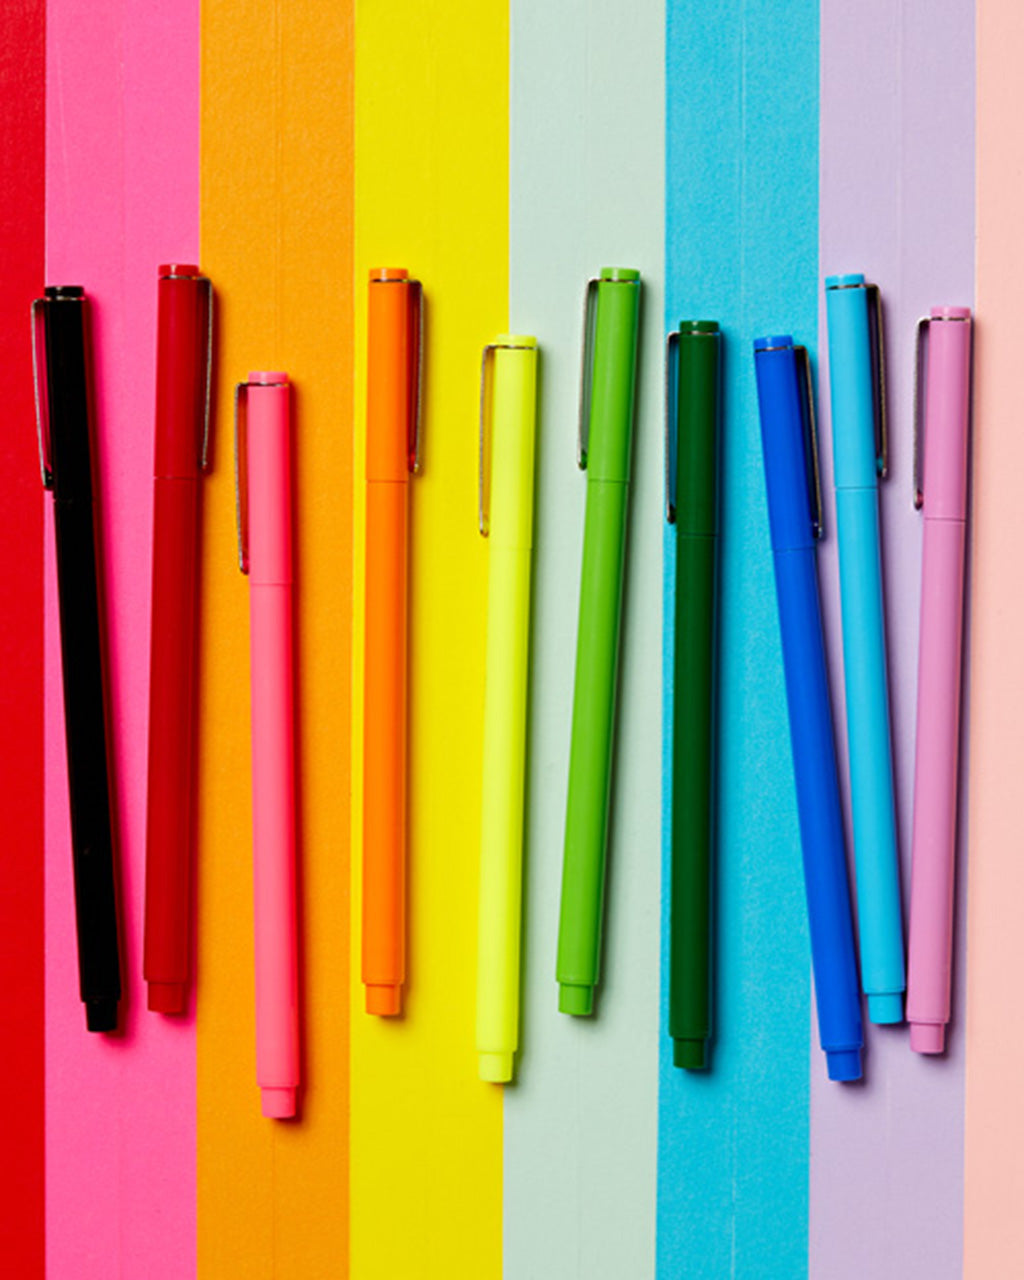 Multicolor Pen 6-in-1 22 Packs Multi Colored Pens in Algeria